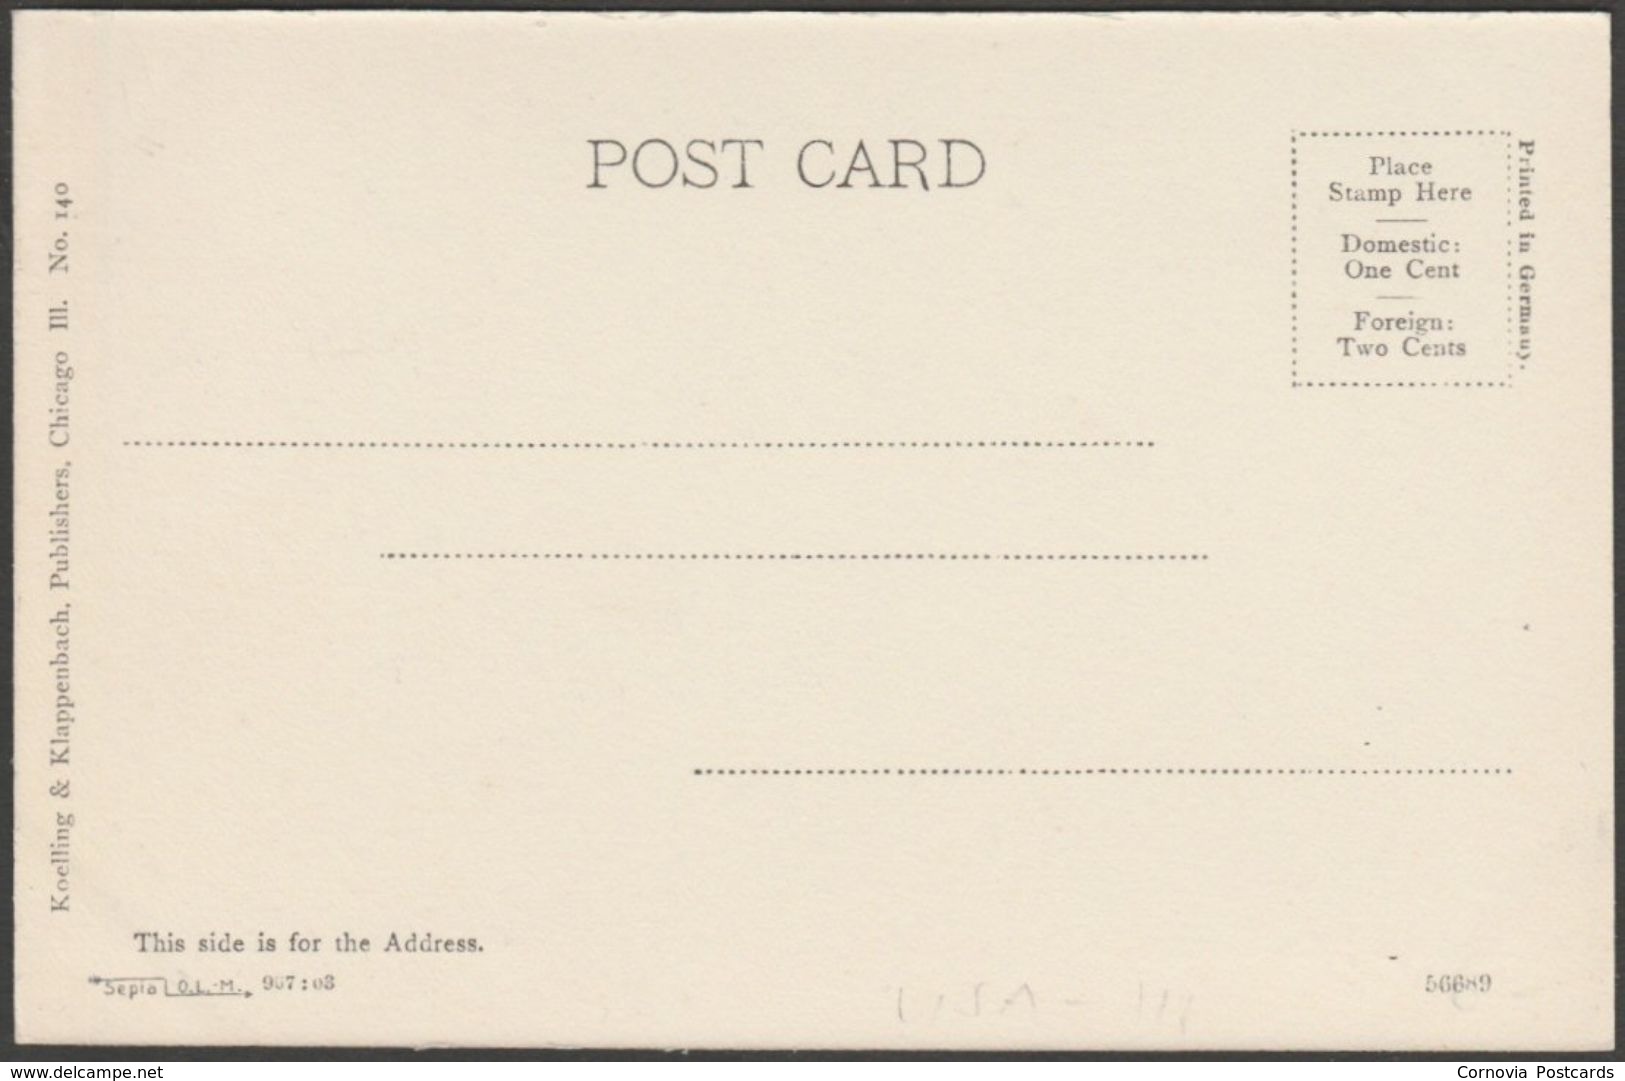 Union Stock Yards, Chicago, Illinois, C.1900-05 - Koelling & Klappenbach Postcard - Chicago